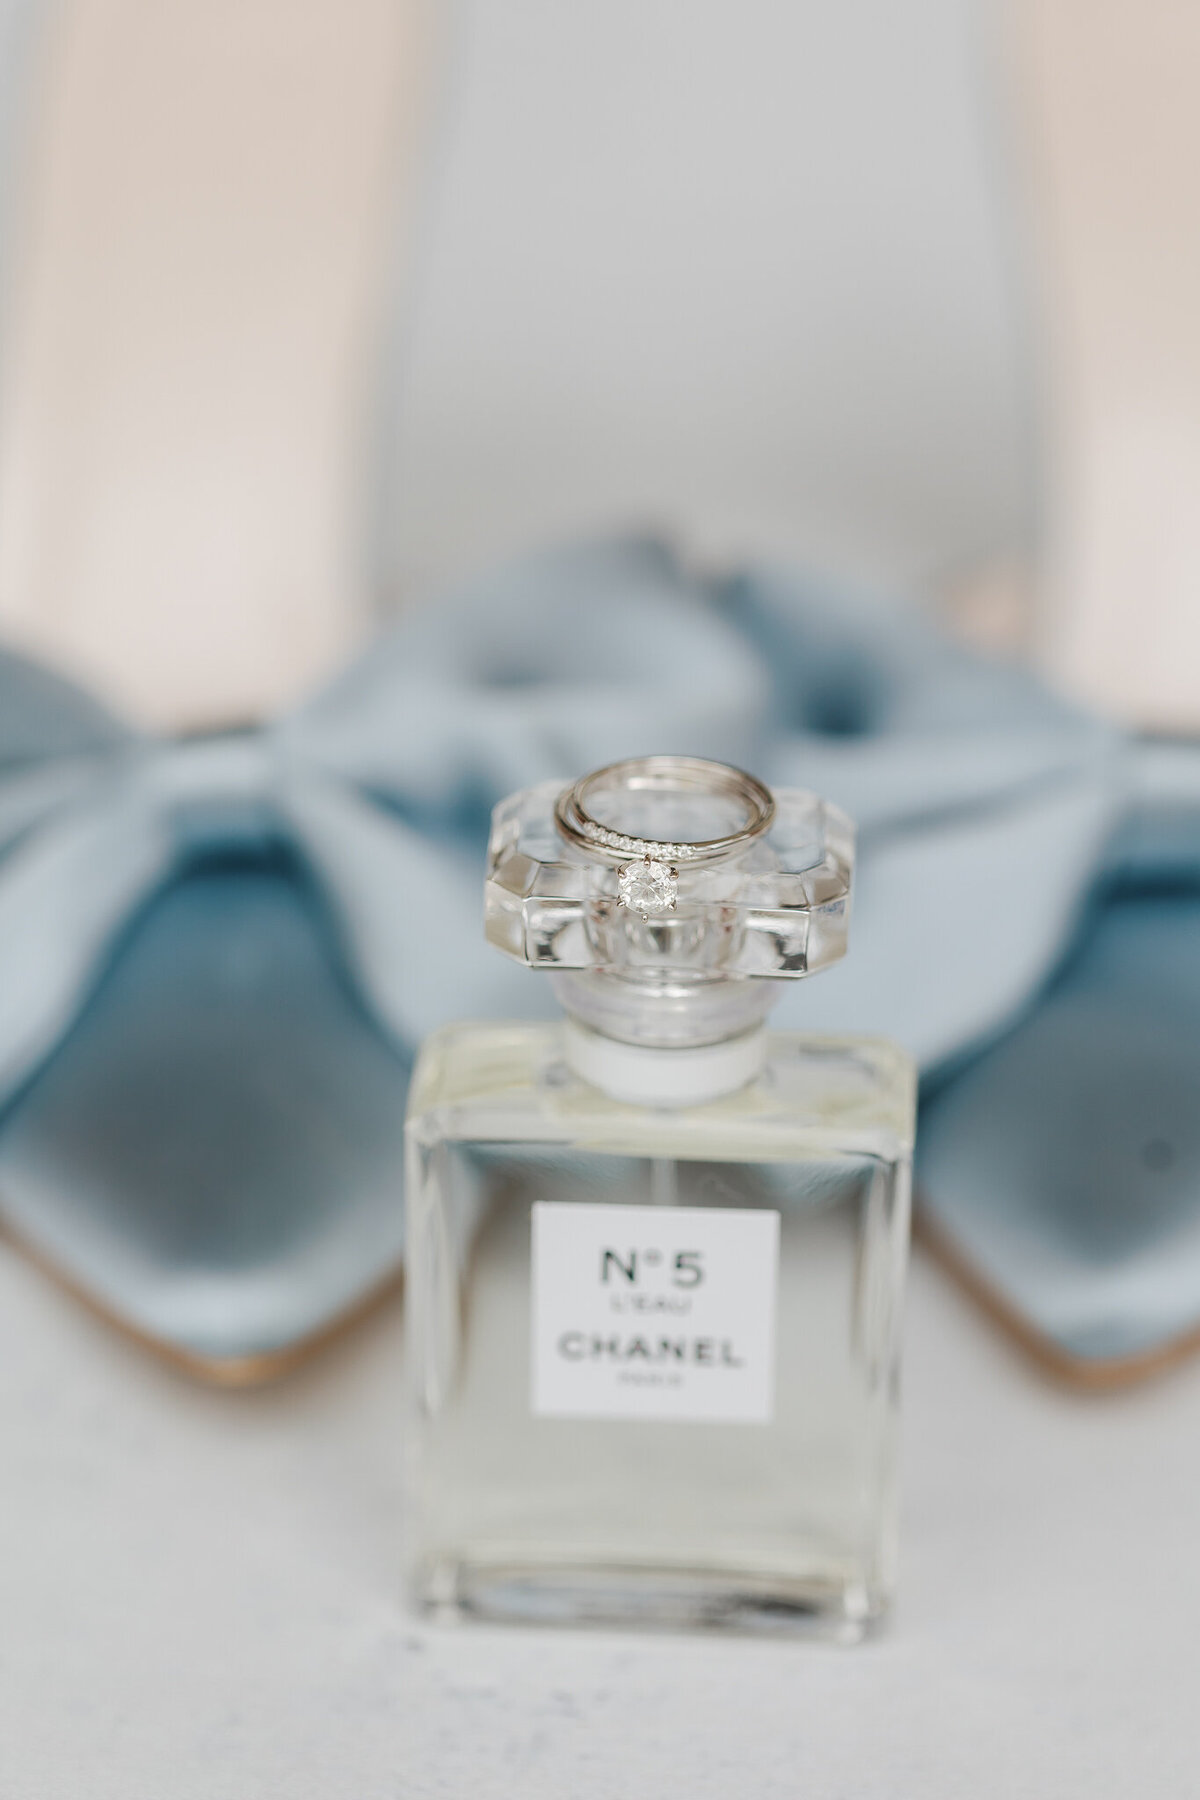 Channel-Perfume